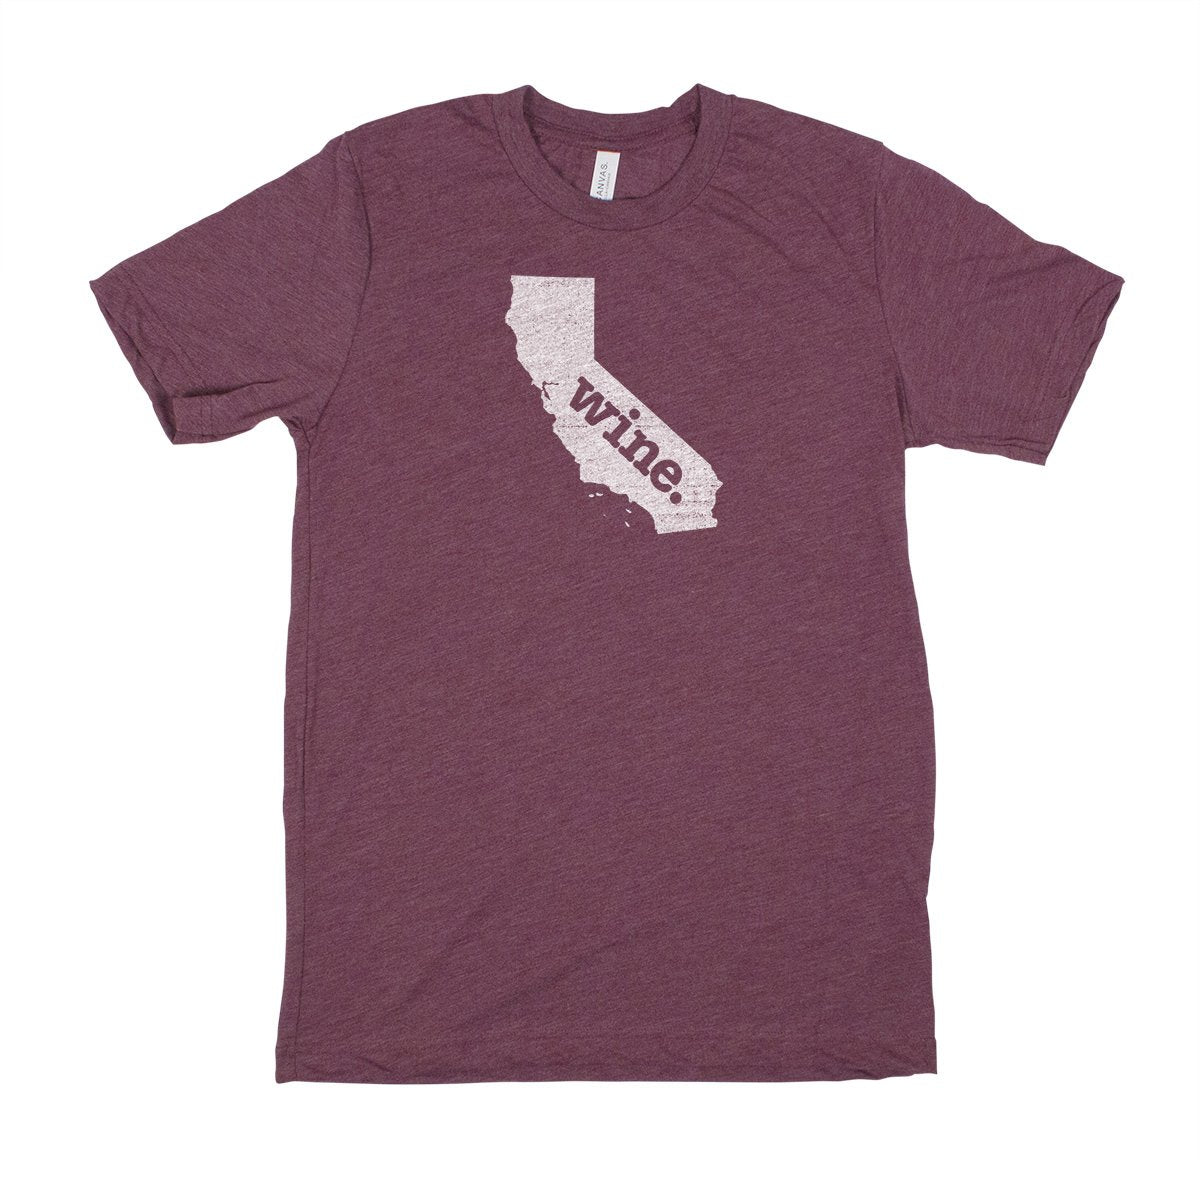 hike. Men's Unisex T-Shirt - Colorado